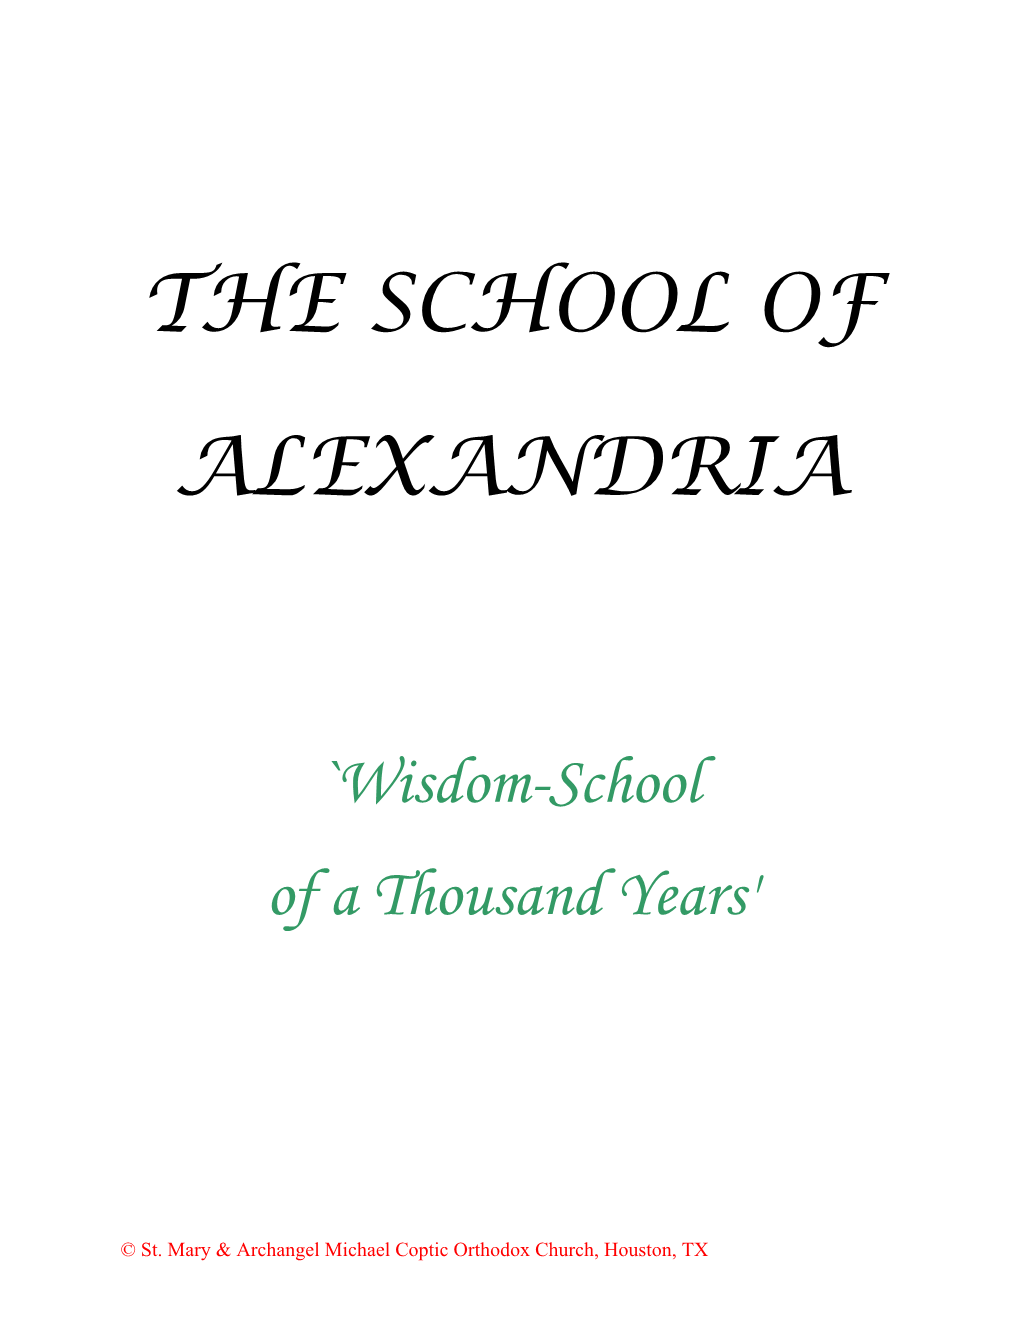 The School of Alexandria